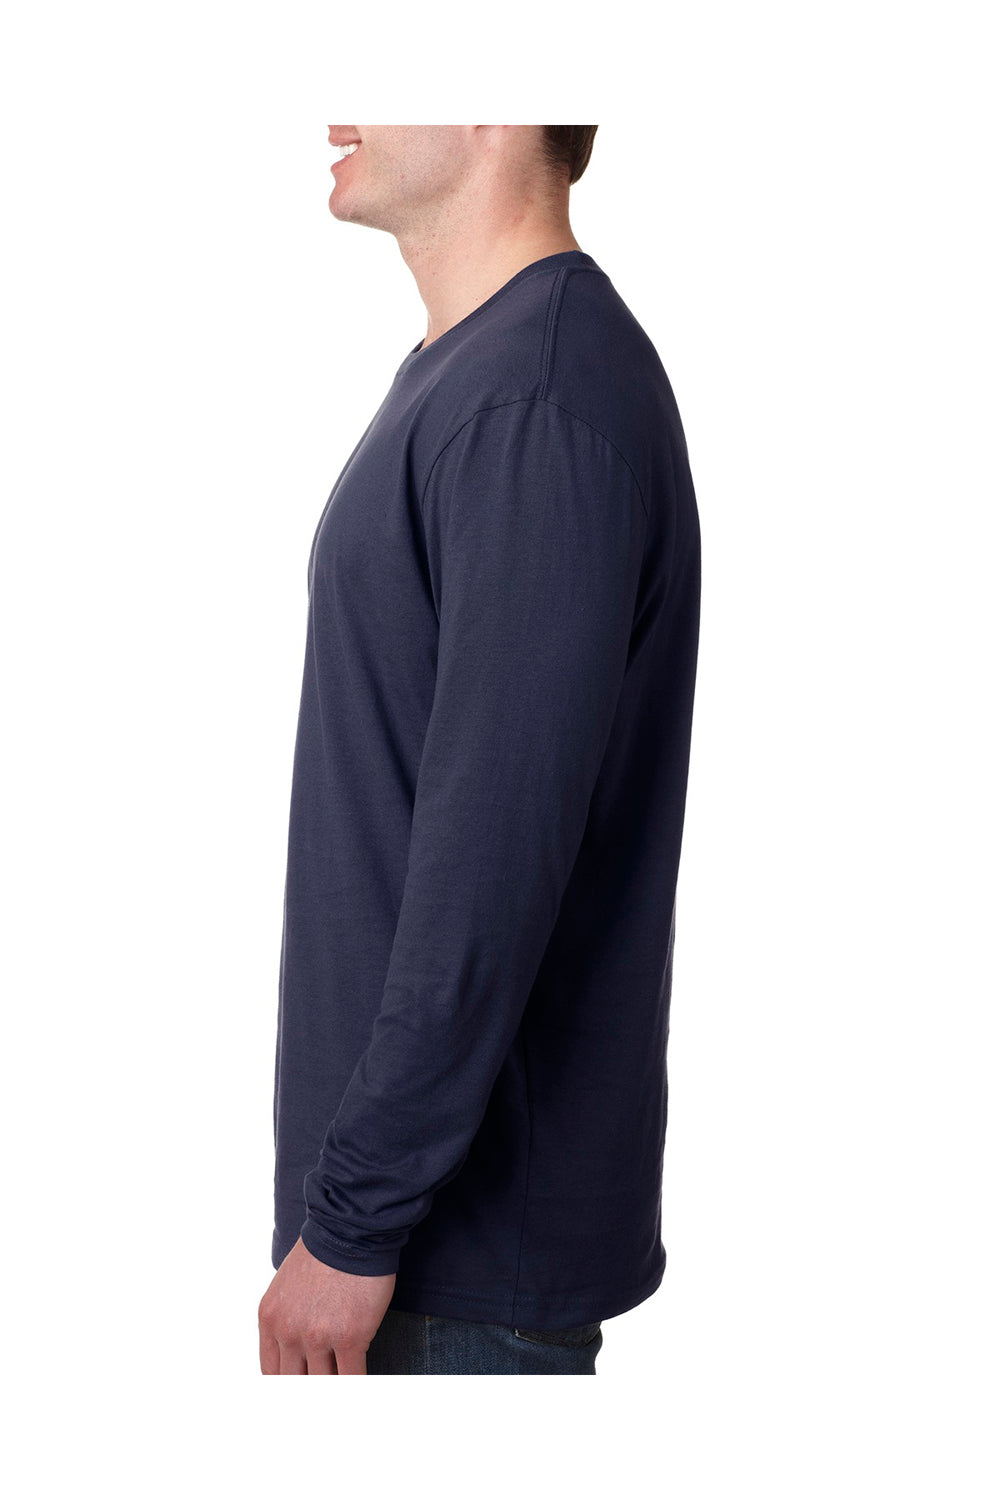 Next Level N3601 Mens Fine Jersey Long Sleeve Crewneck T-Shirt Navy Blue Side